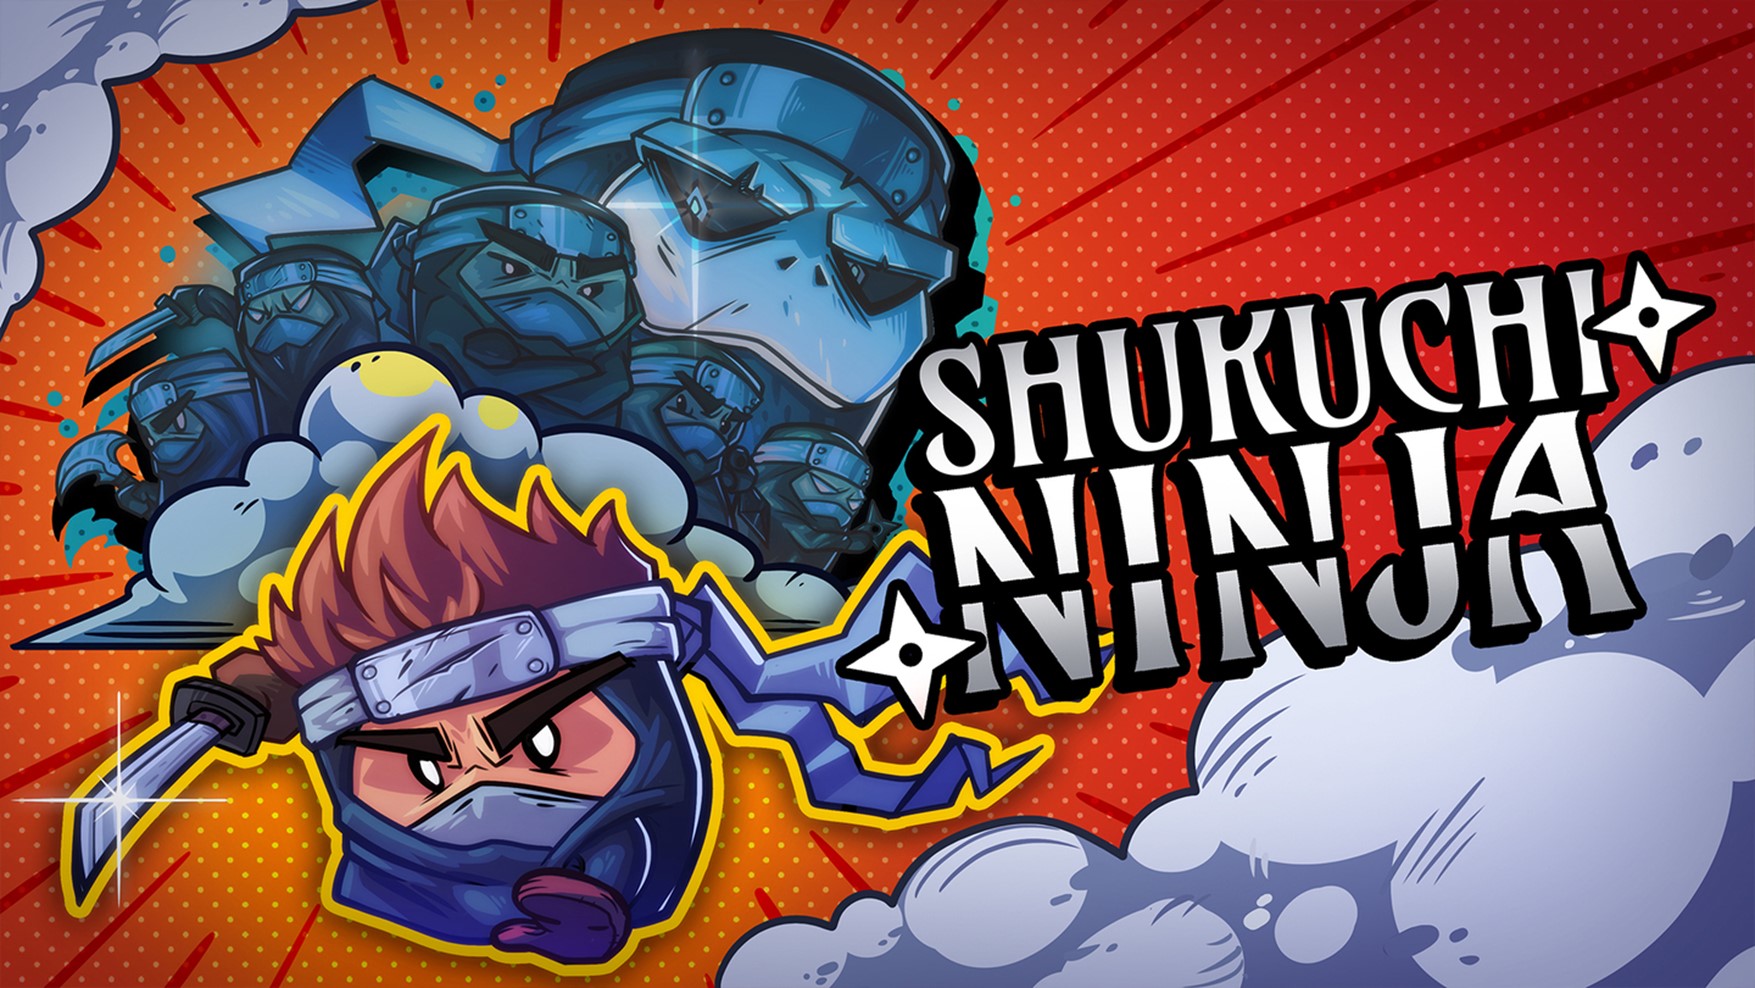 Shukuchi ninja titled key art